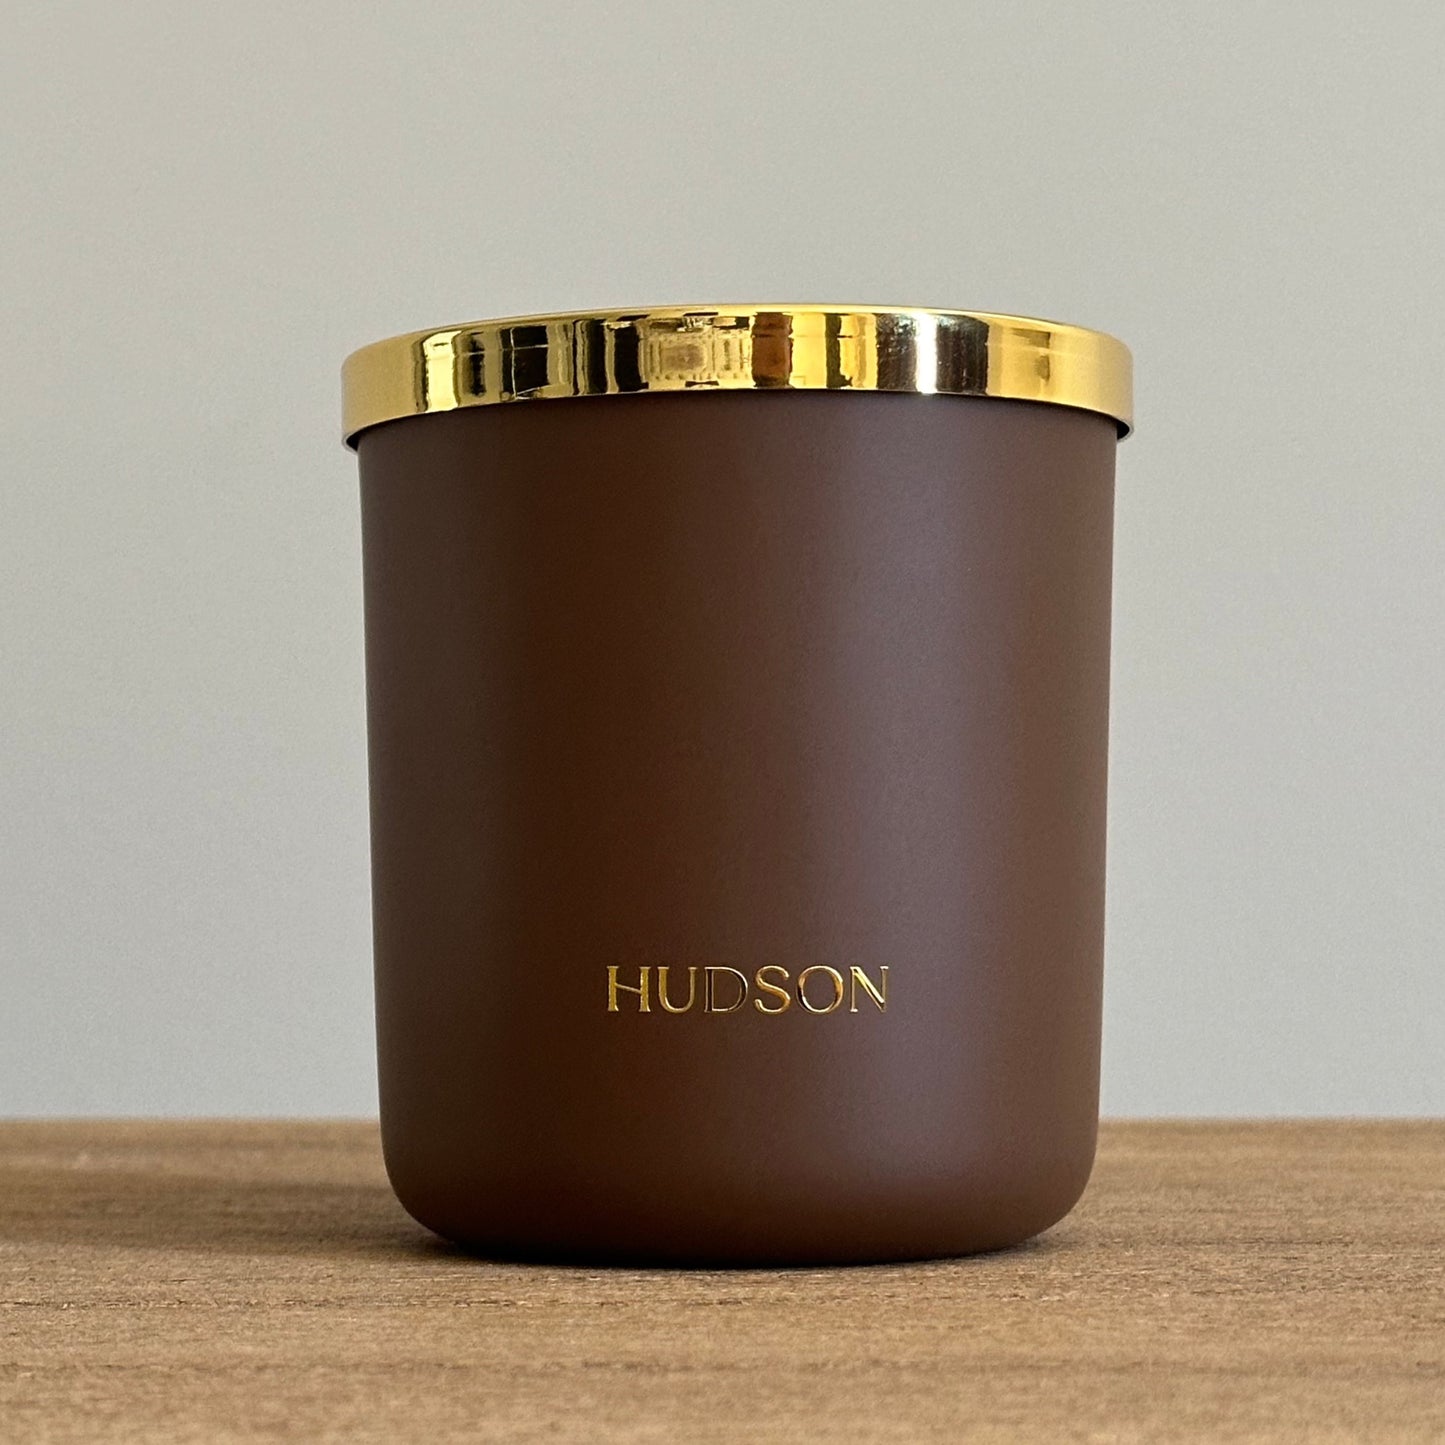 Hudson Candle - 16 oz